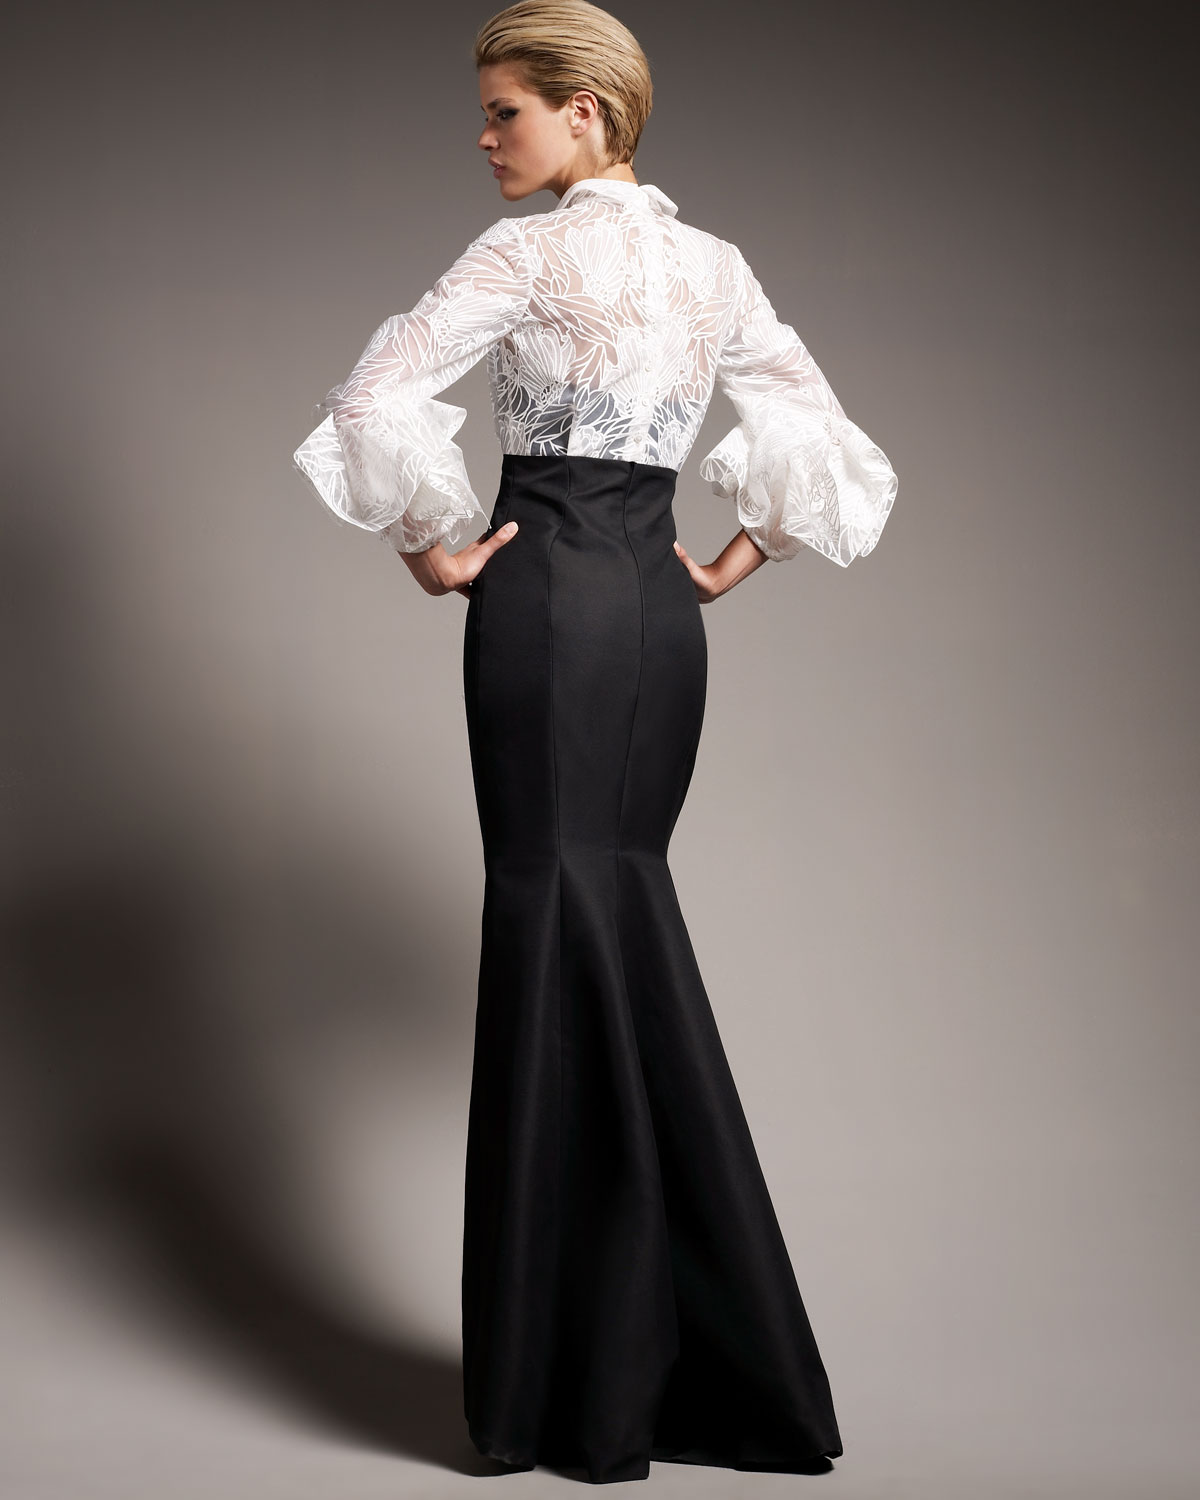 Lyst - Carolina Herrera Origami-sleeve Shirted Gown in White1200 x 1500